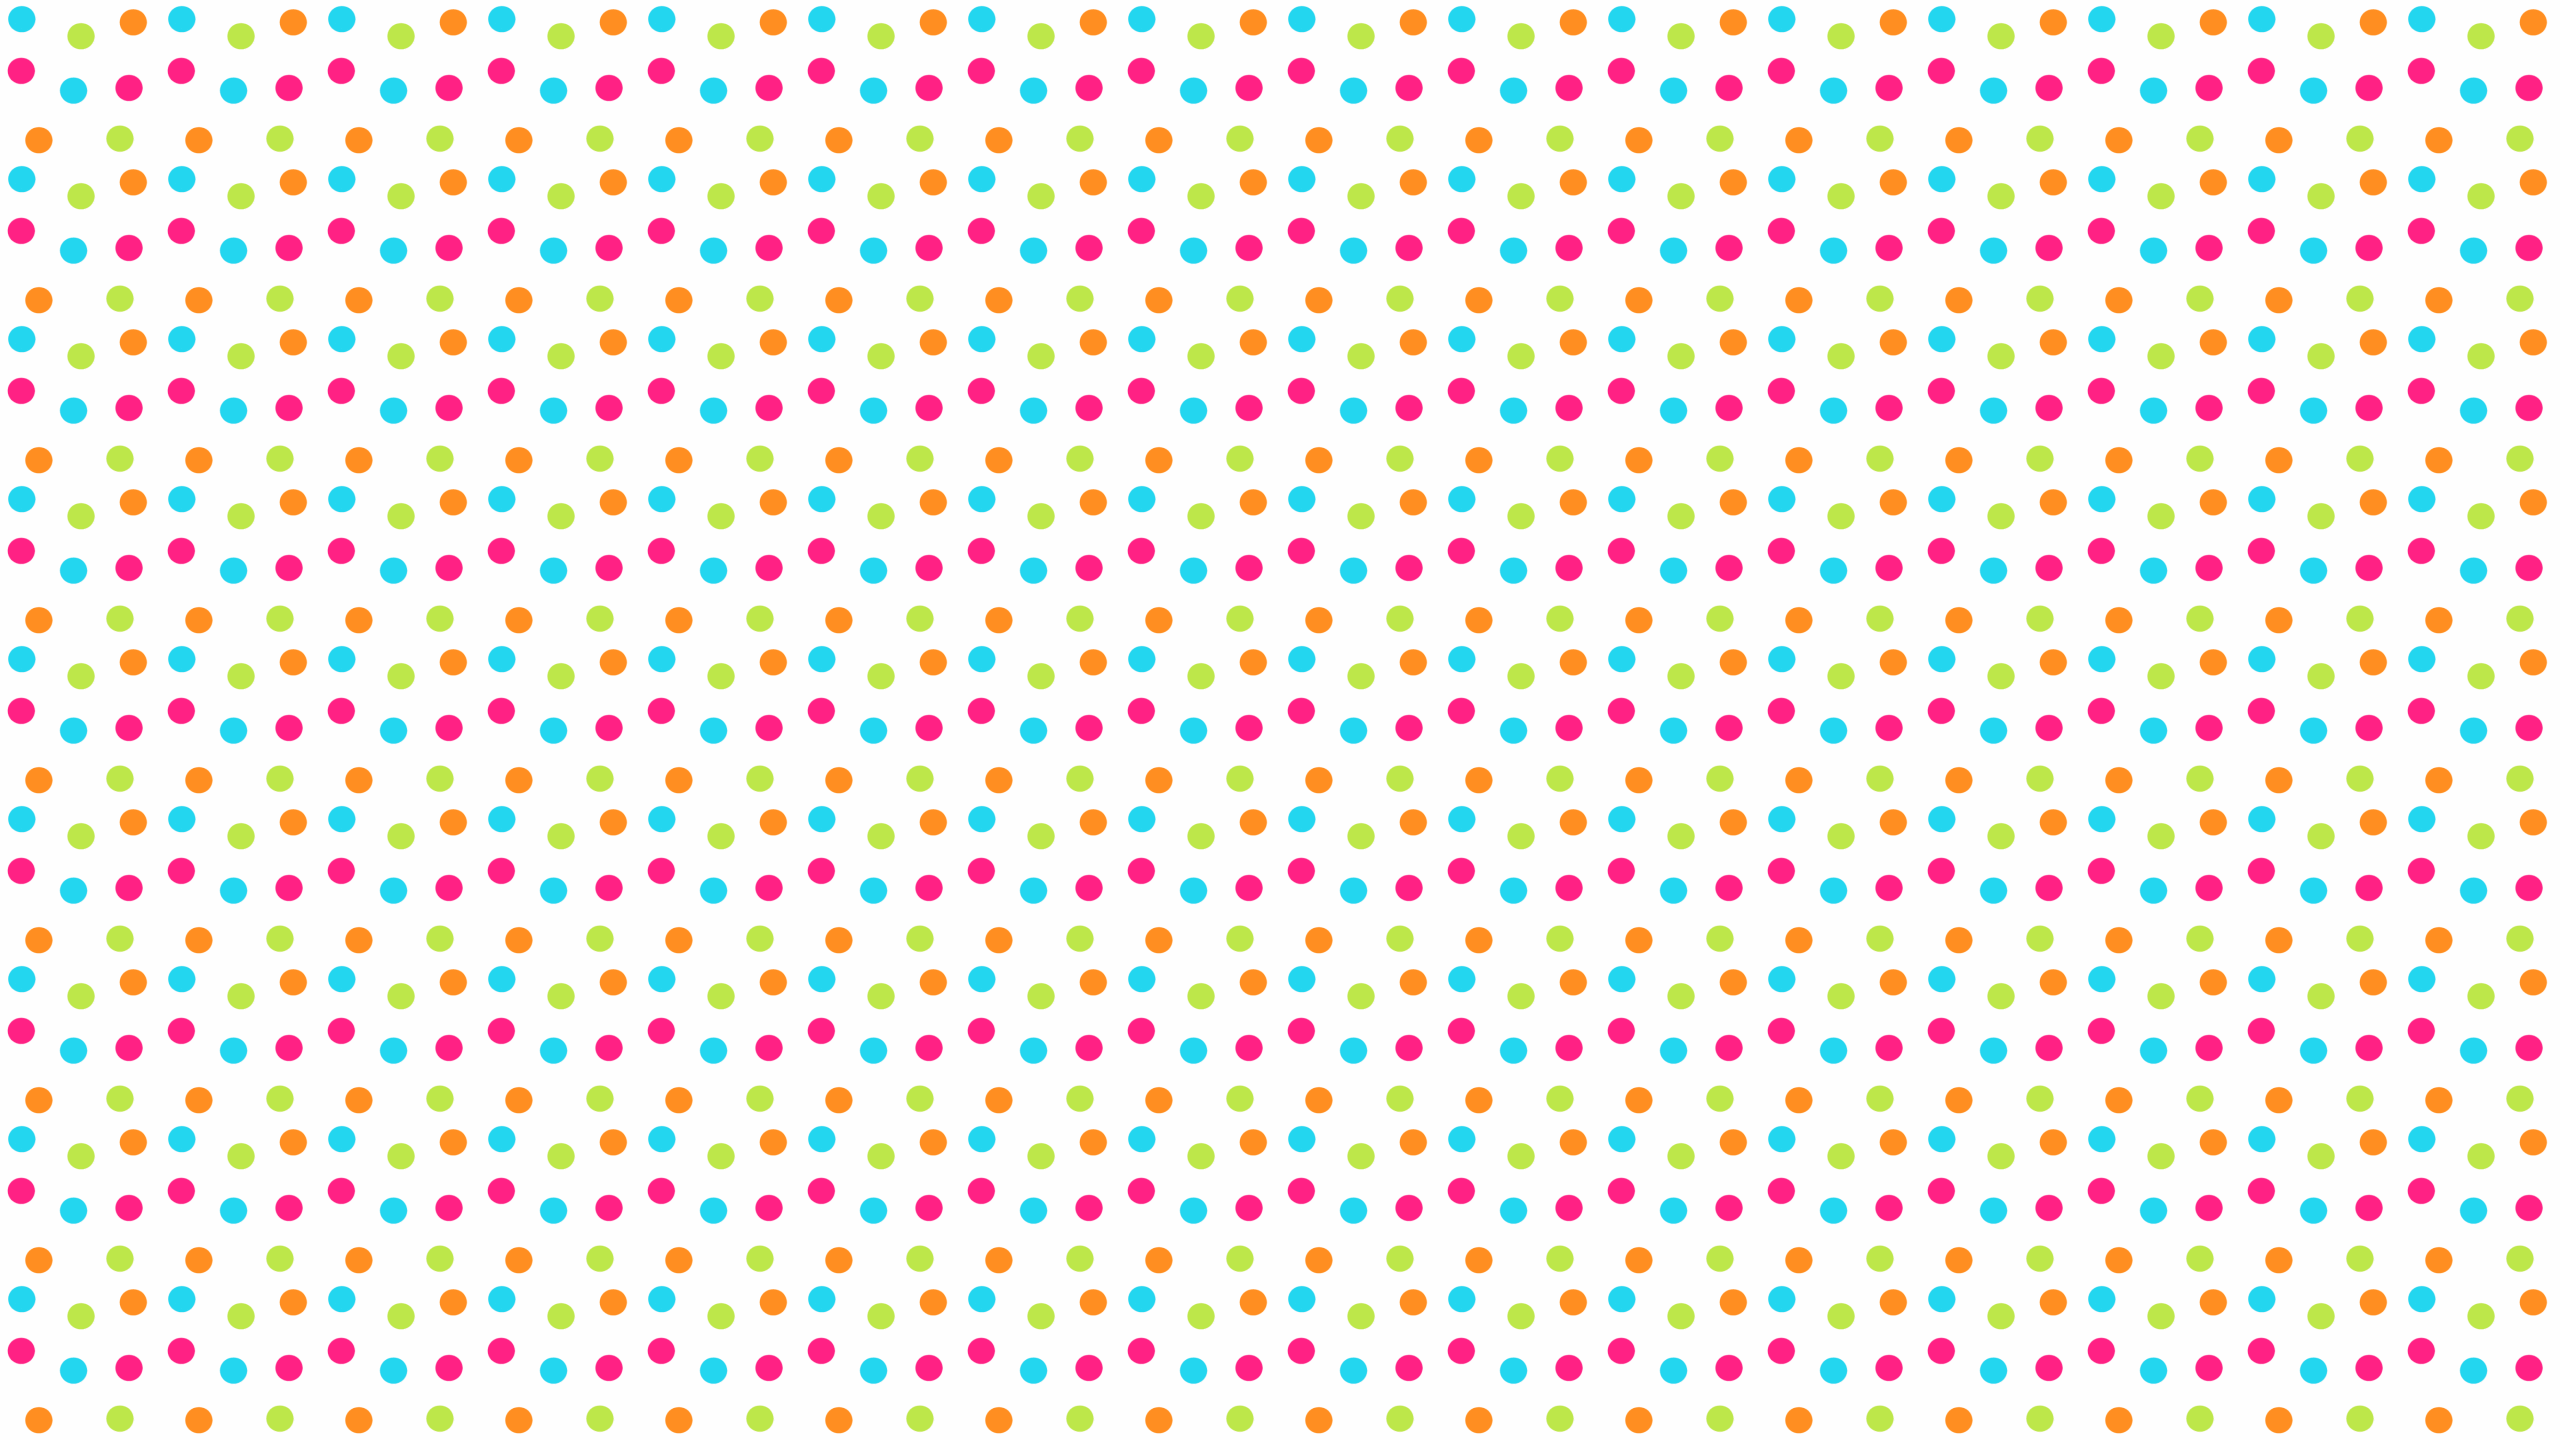 Cool Polka Dot Wallpaper